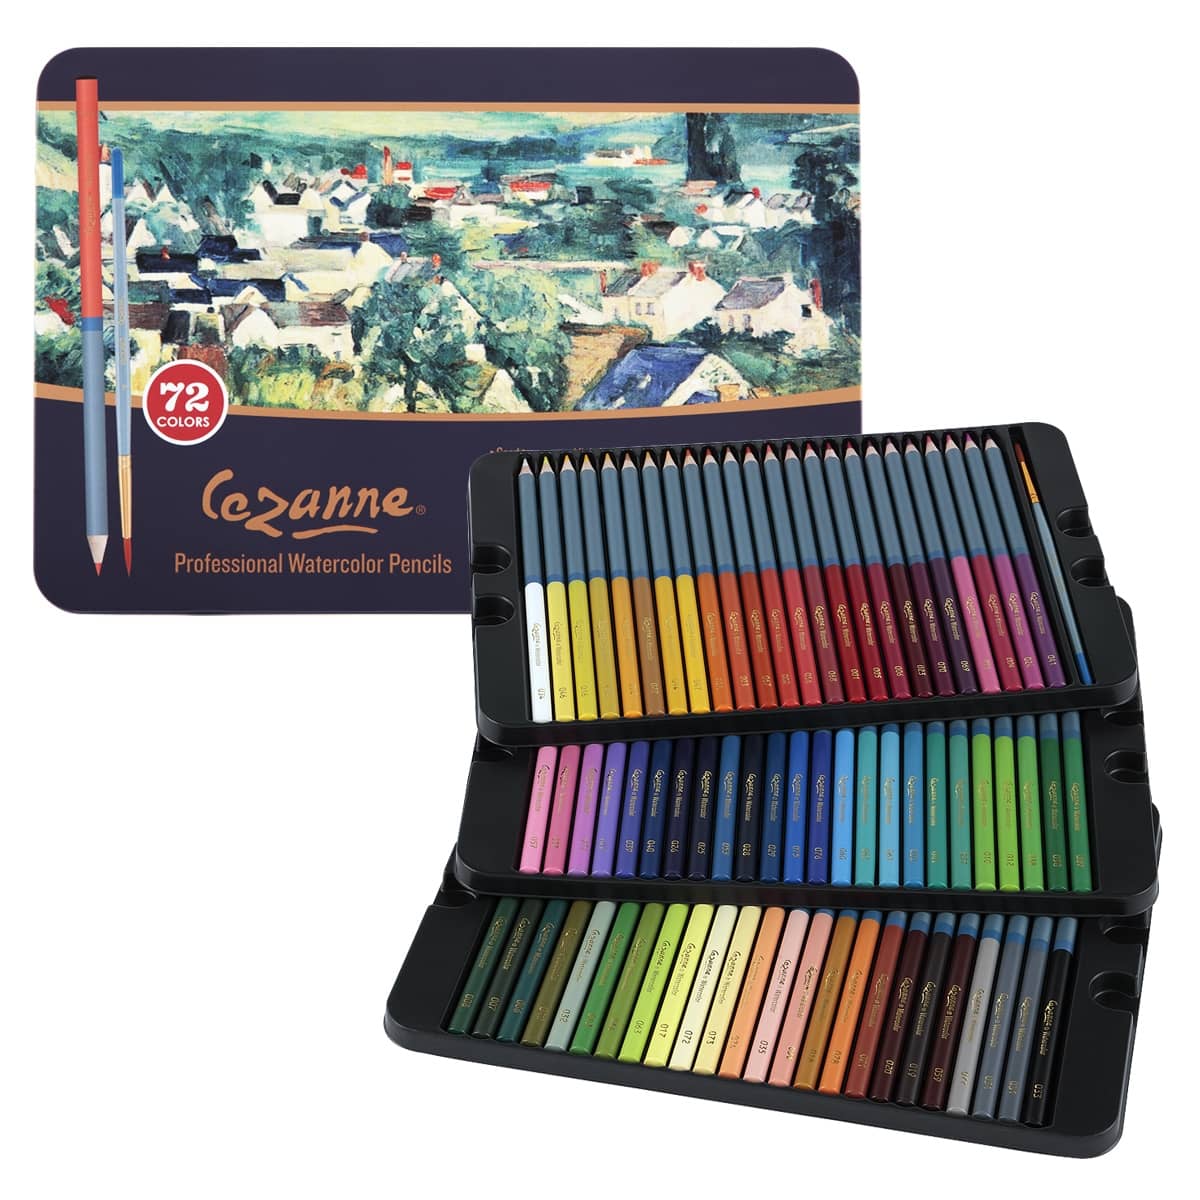 Cezanne Premium Watercolor Pencils Set of 72